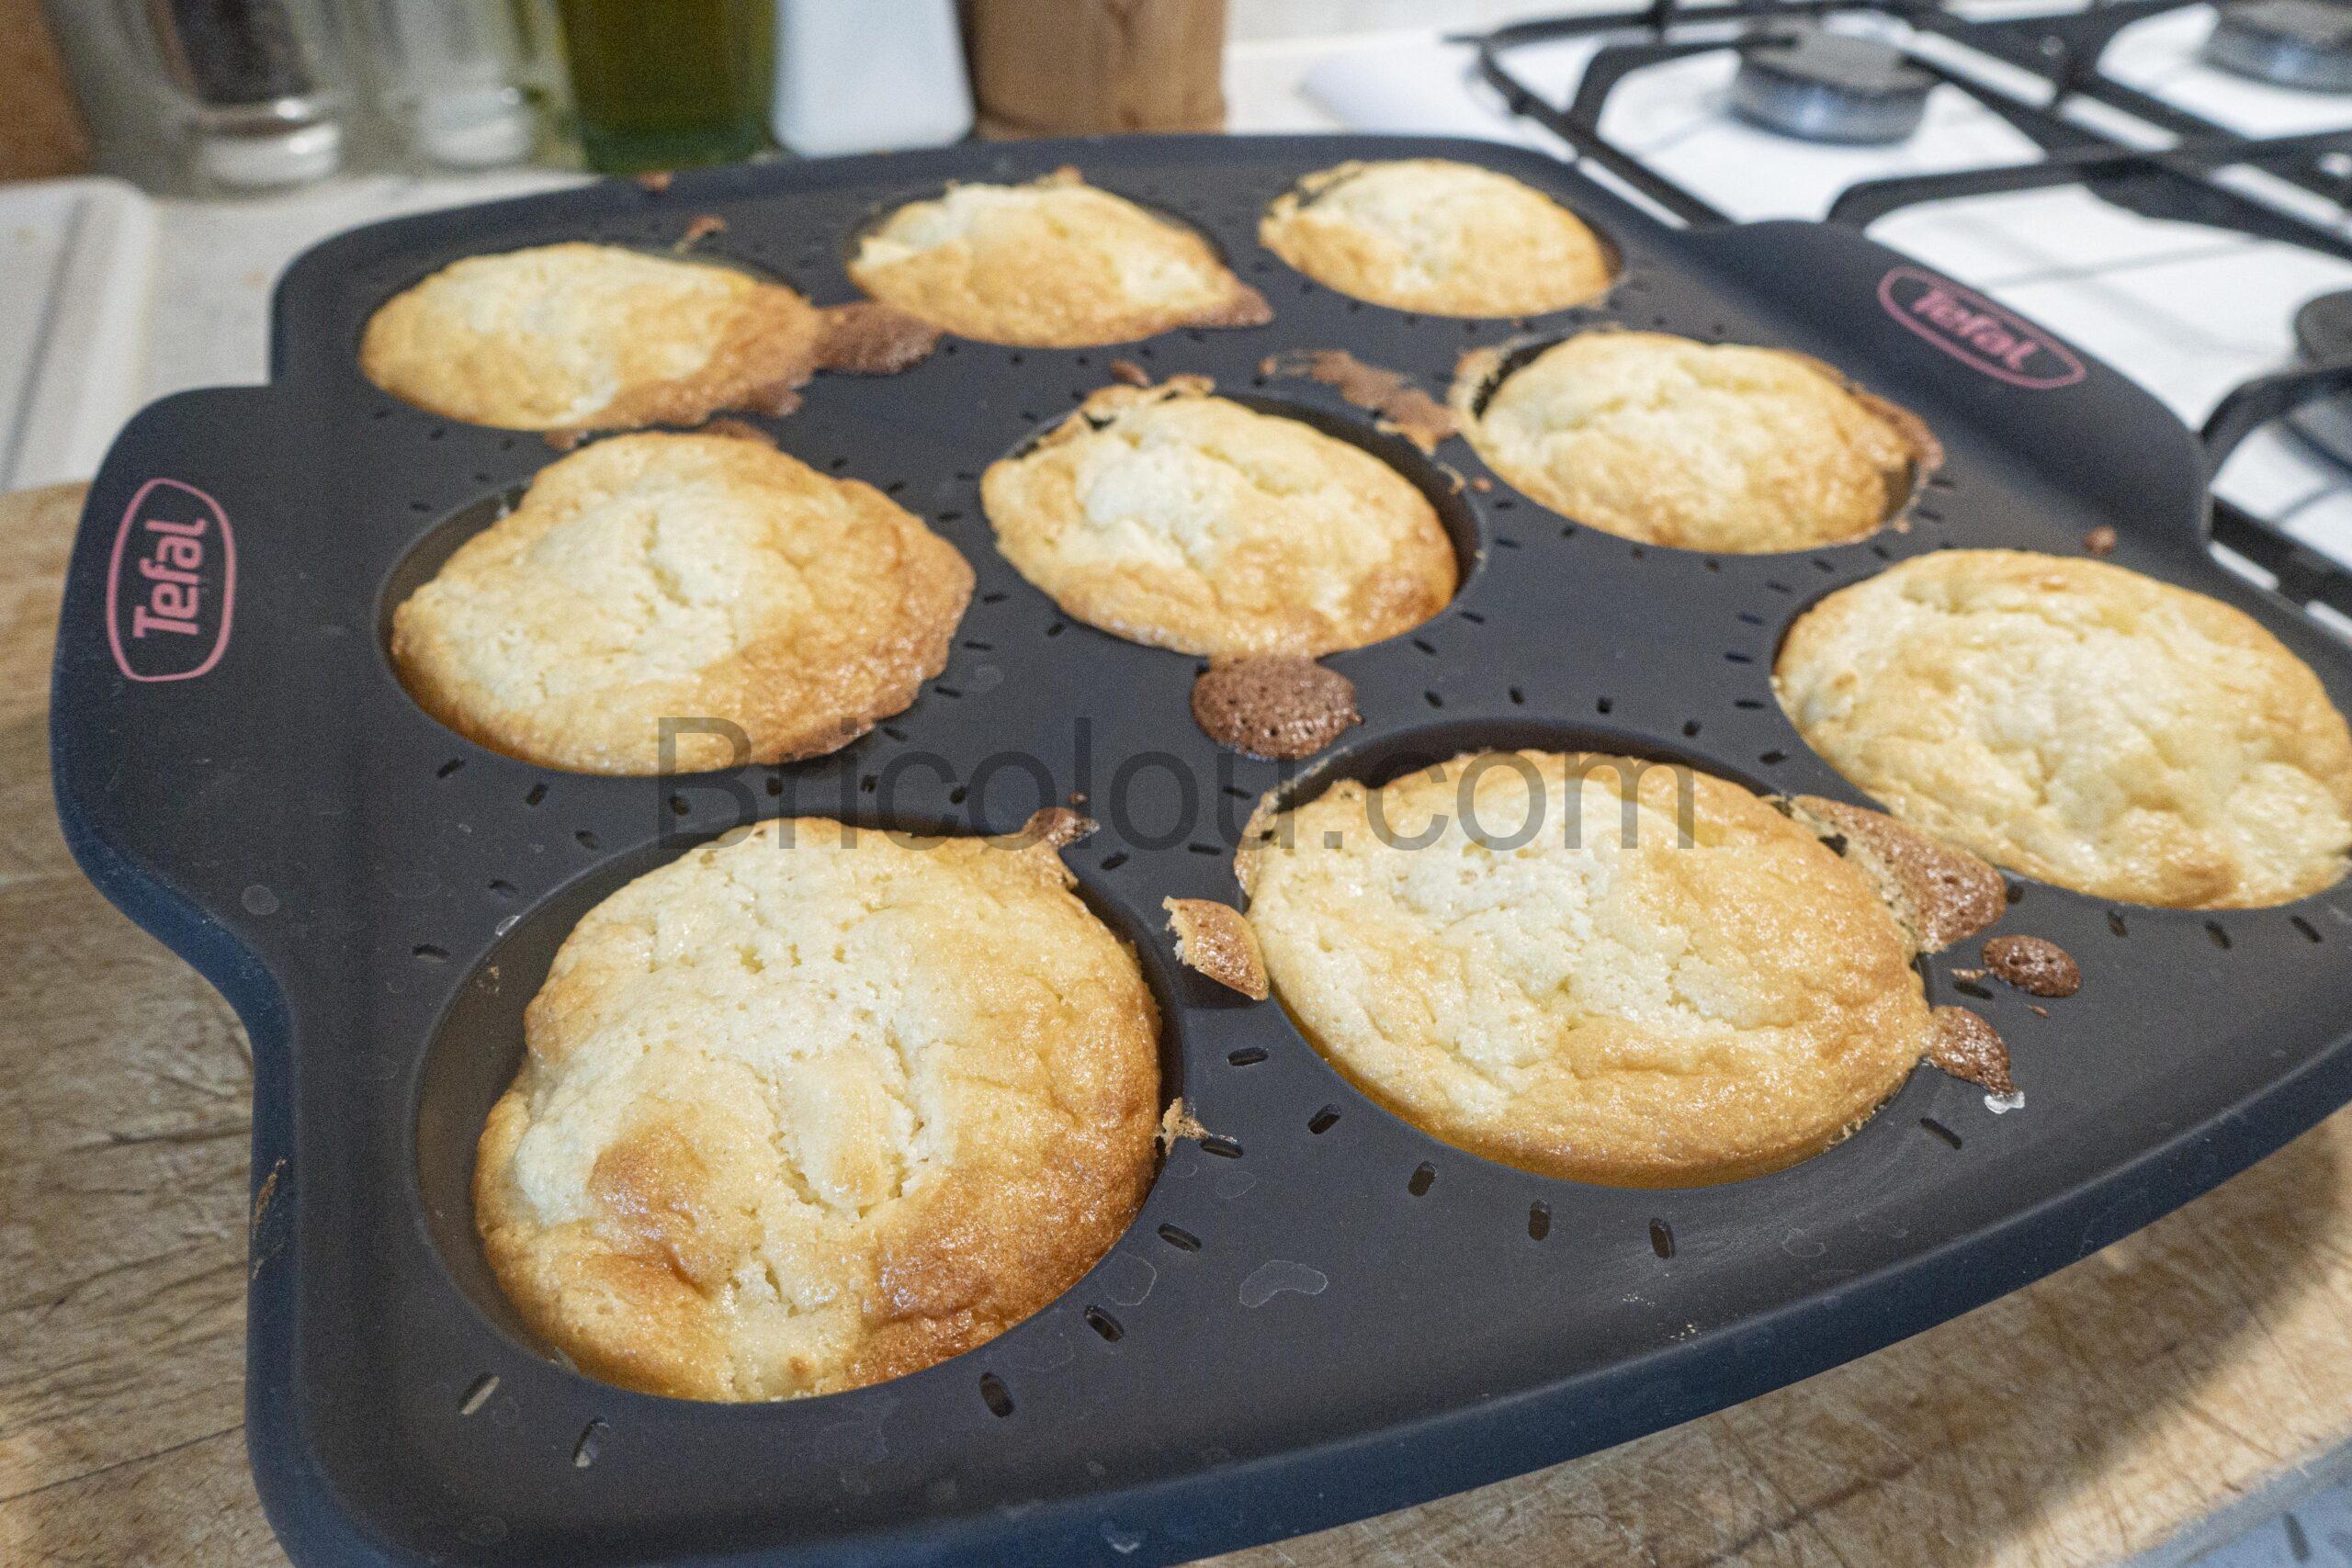 Tefal Crispybake muffin mould 30 × 29 cm, 9 muffins - J4174714